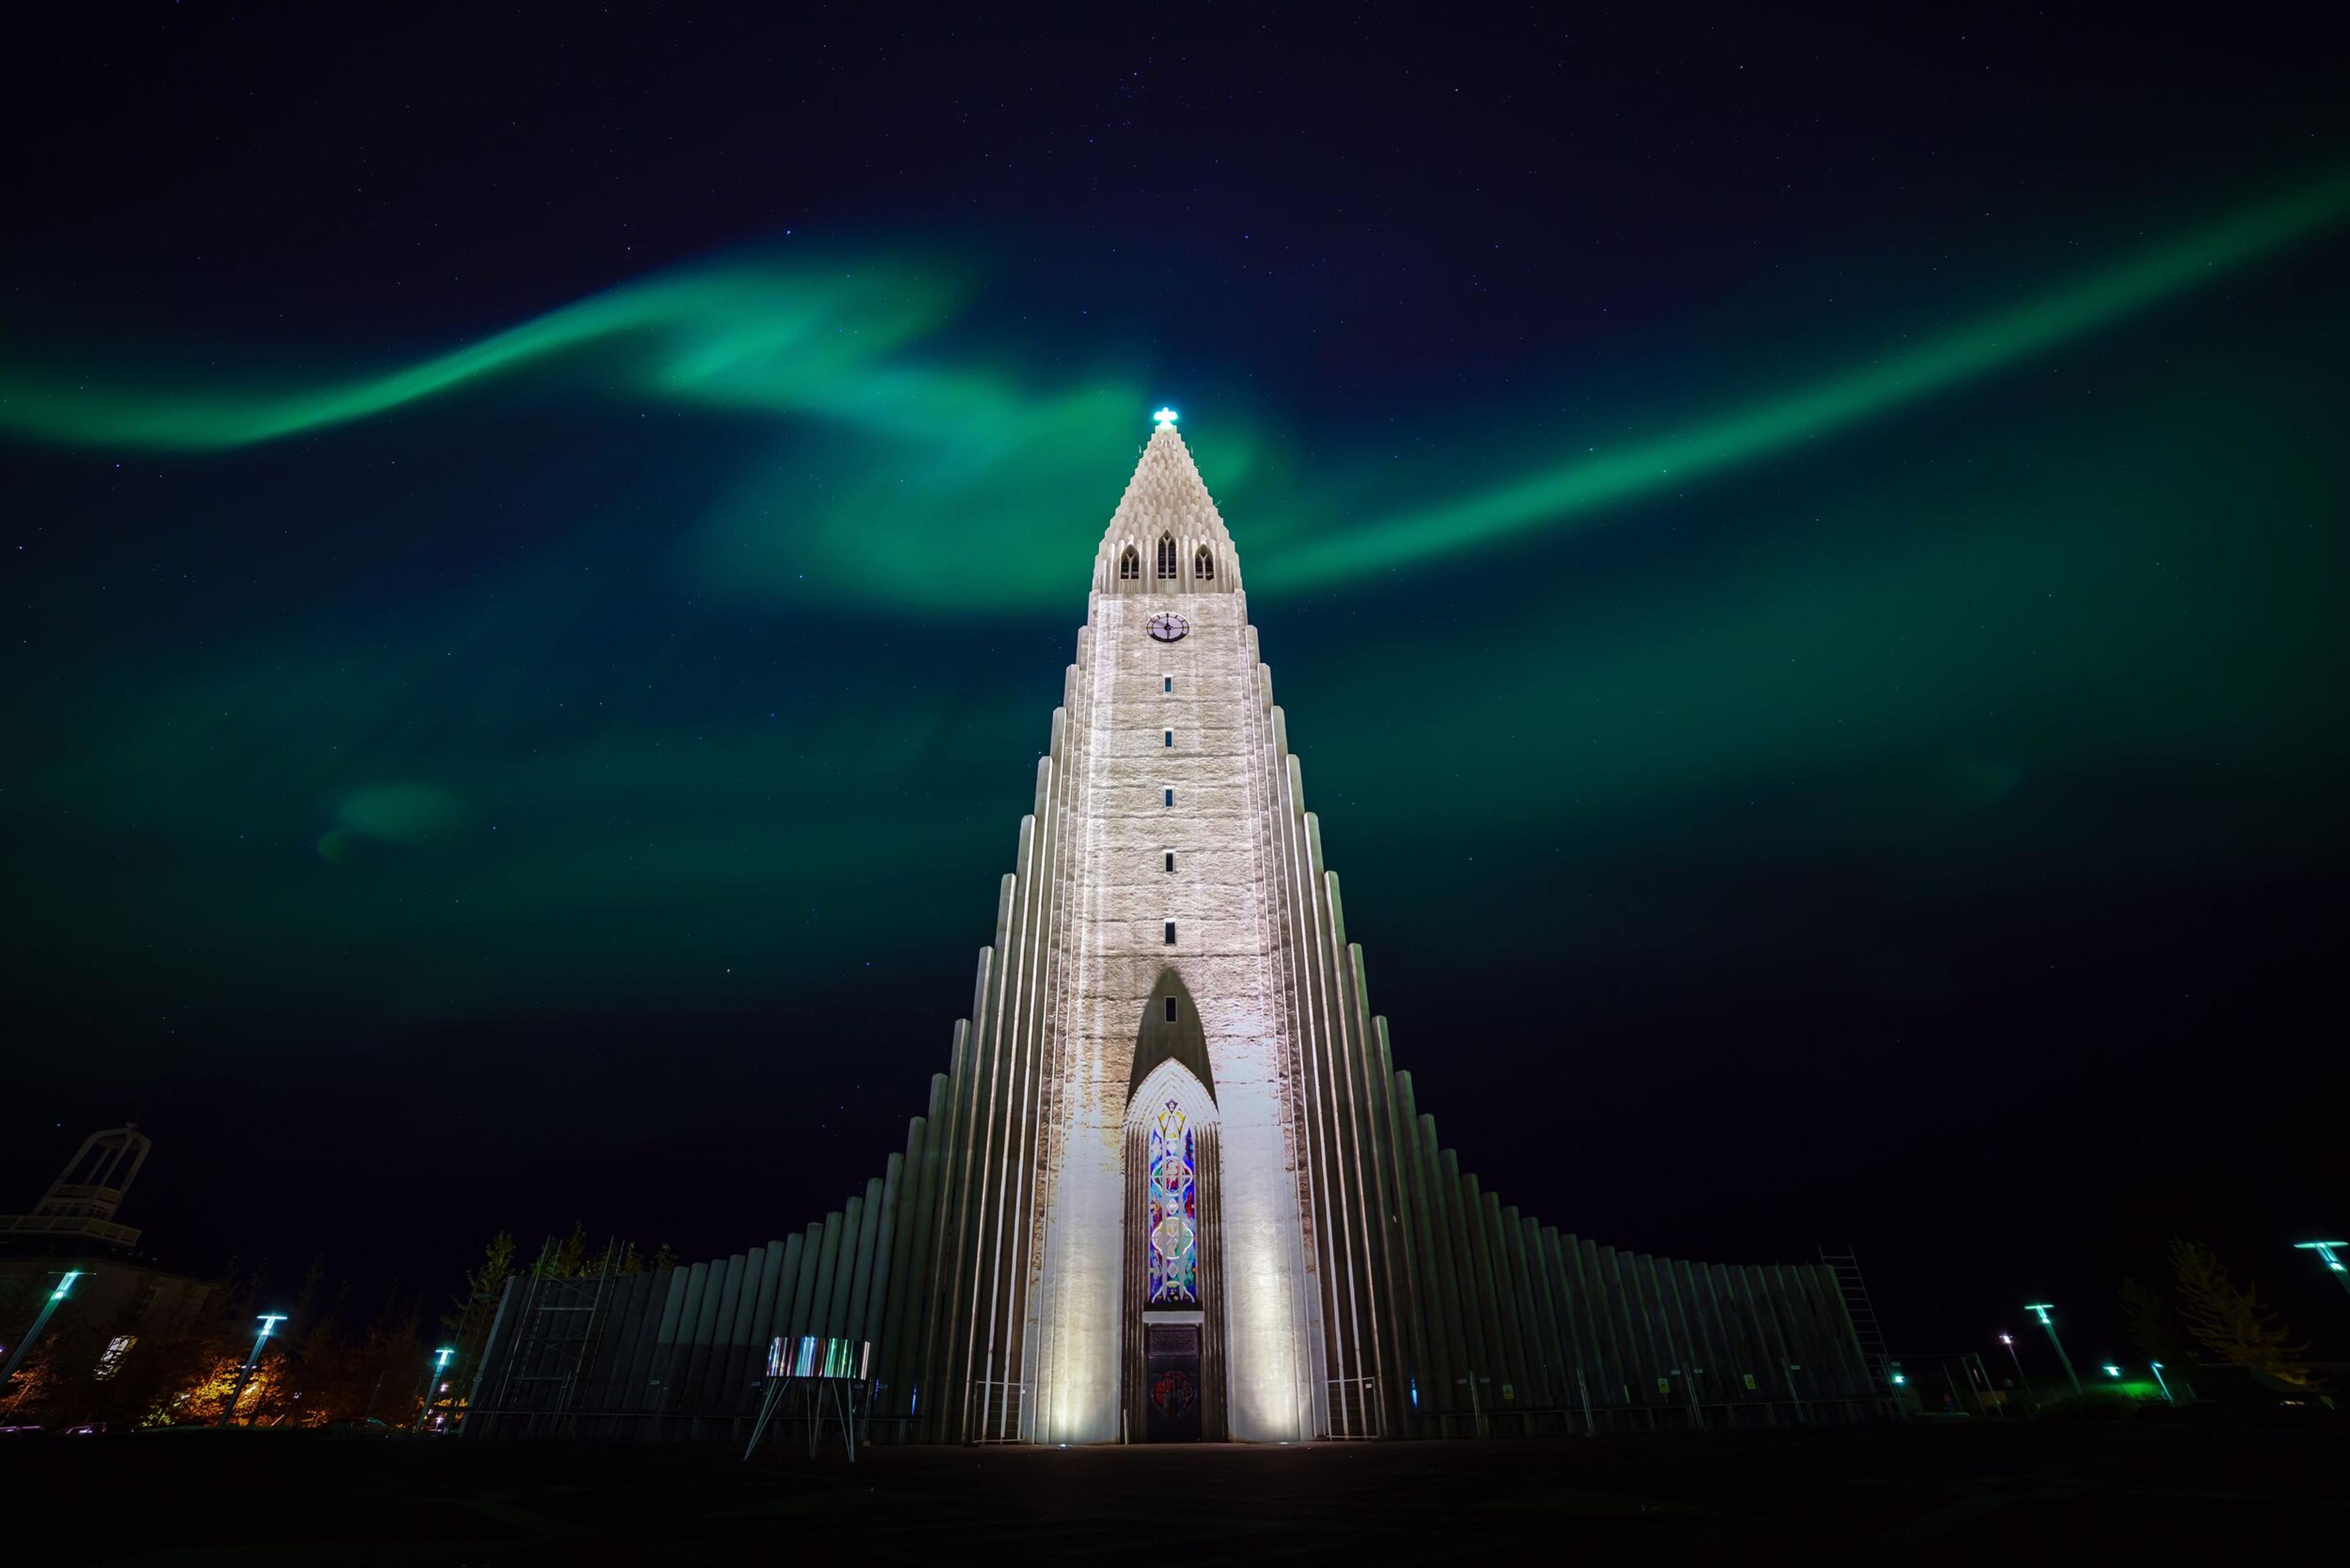 Hallgrímskirkja church under the Northern Lights in Reykjavik, Iceland.